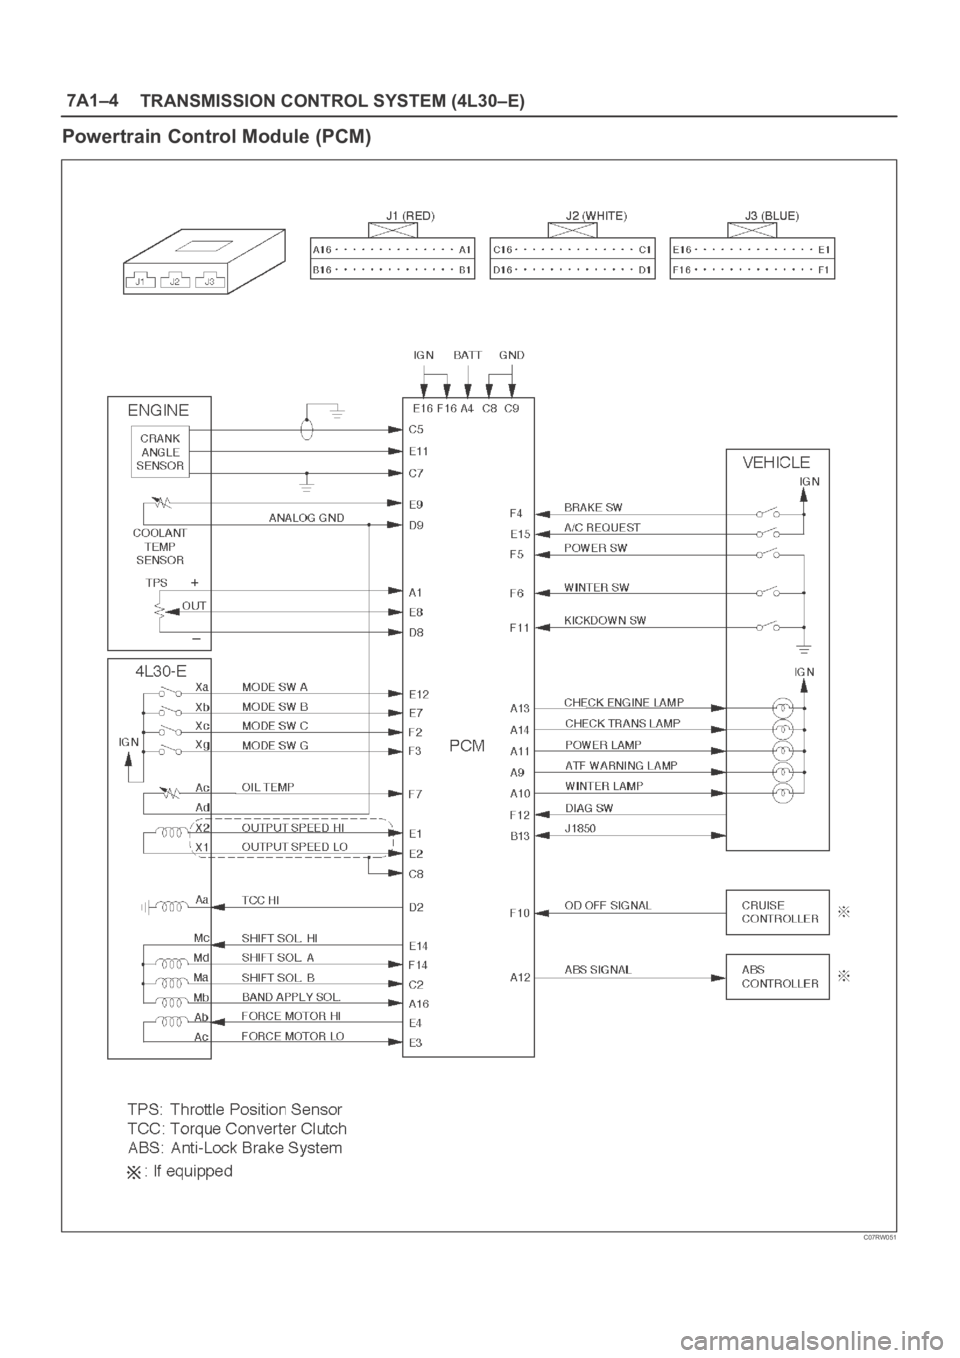 OPEL FRONTERA 1998  Workshop Manual 7A1–4
TRANSMISSION CONTROL SYSTEM (4L30–E)
Powertrain Control Module (PCM)
C07RW051 